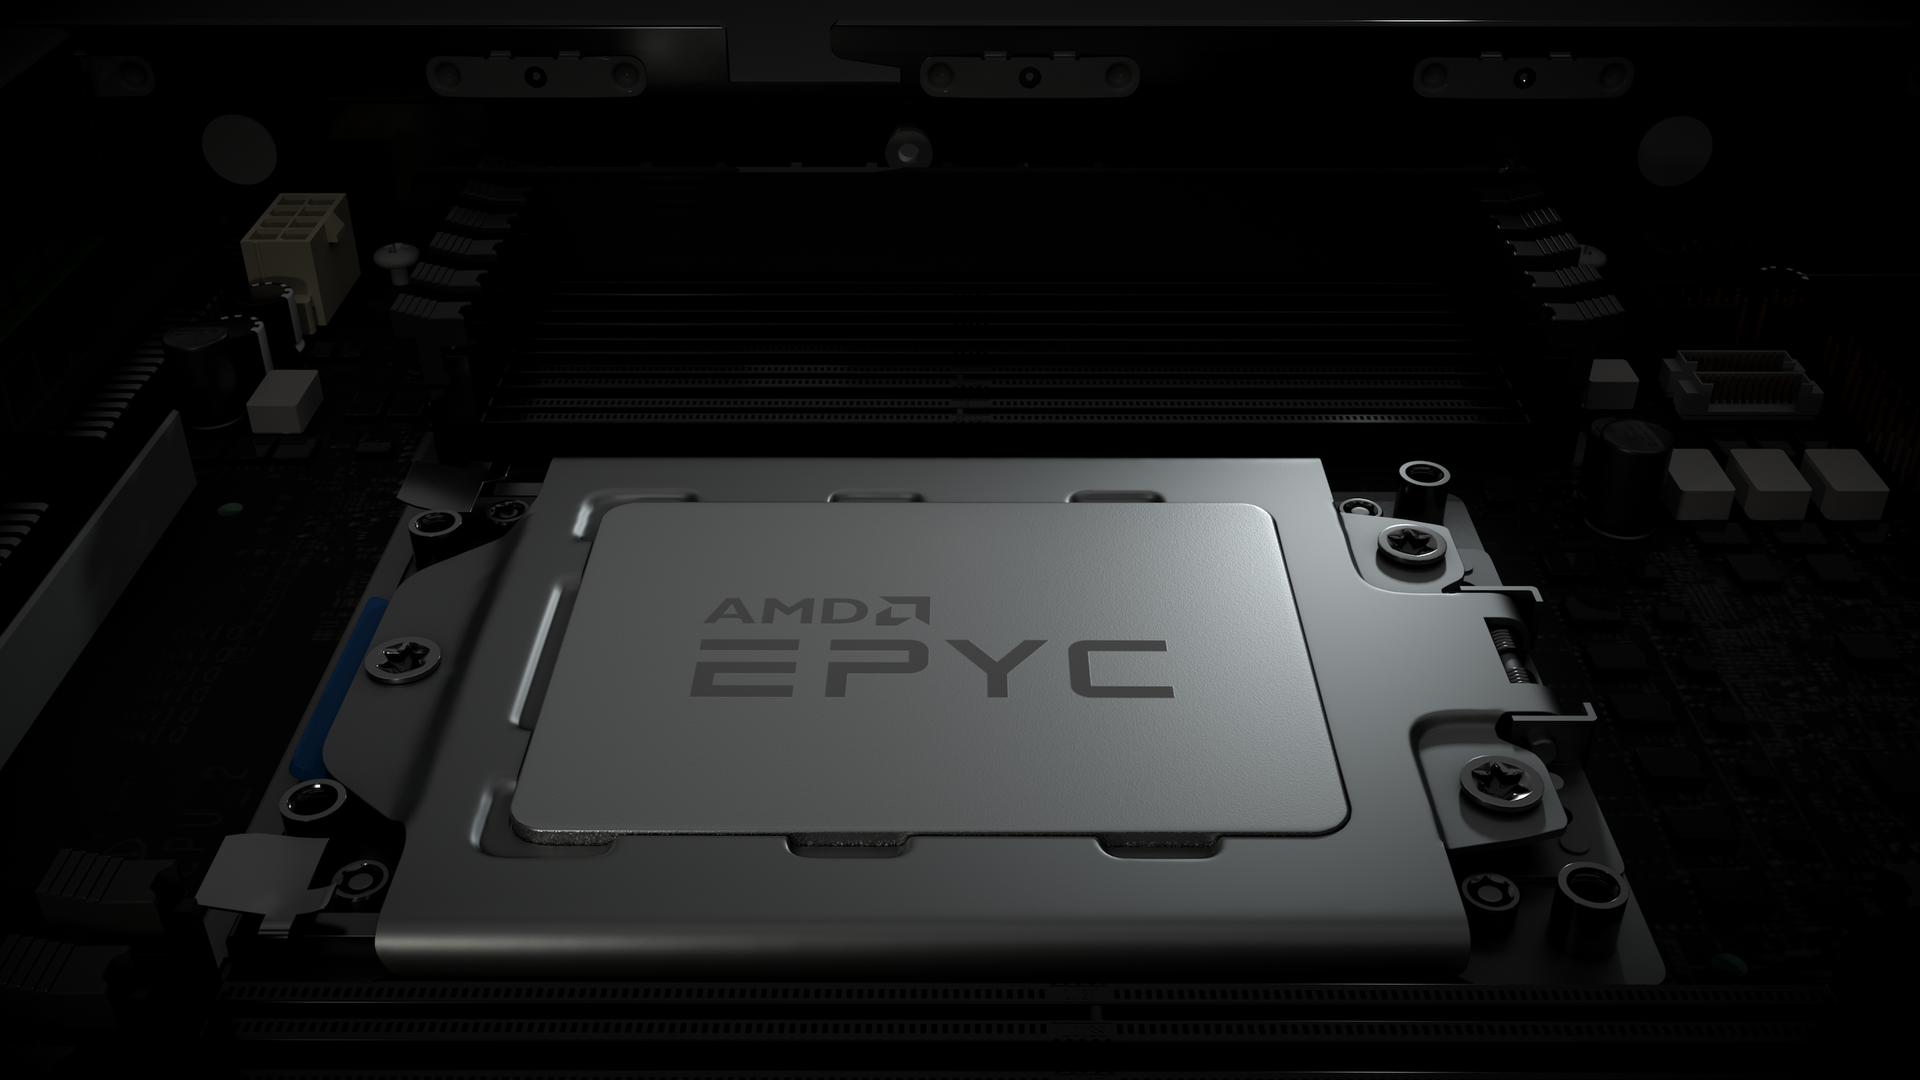 AMD's second-generation EPYC server processor